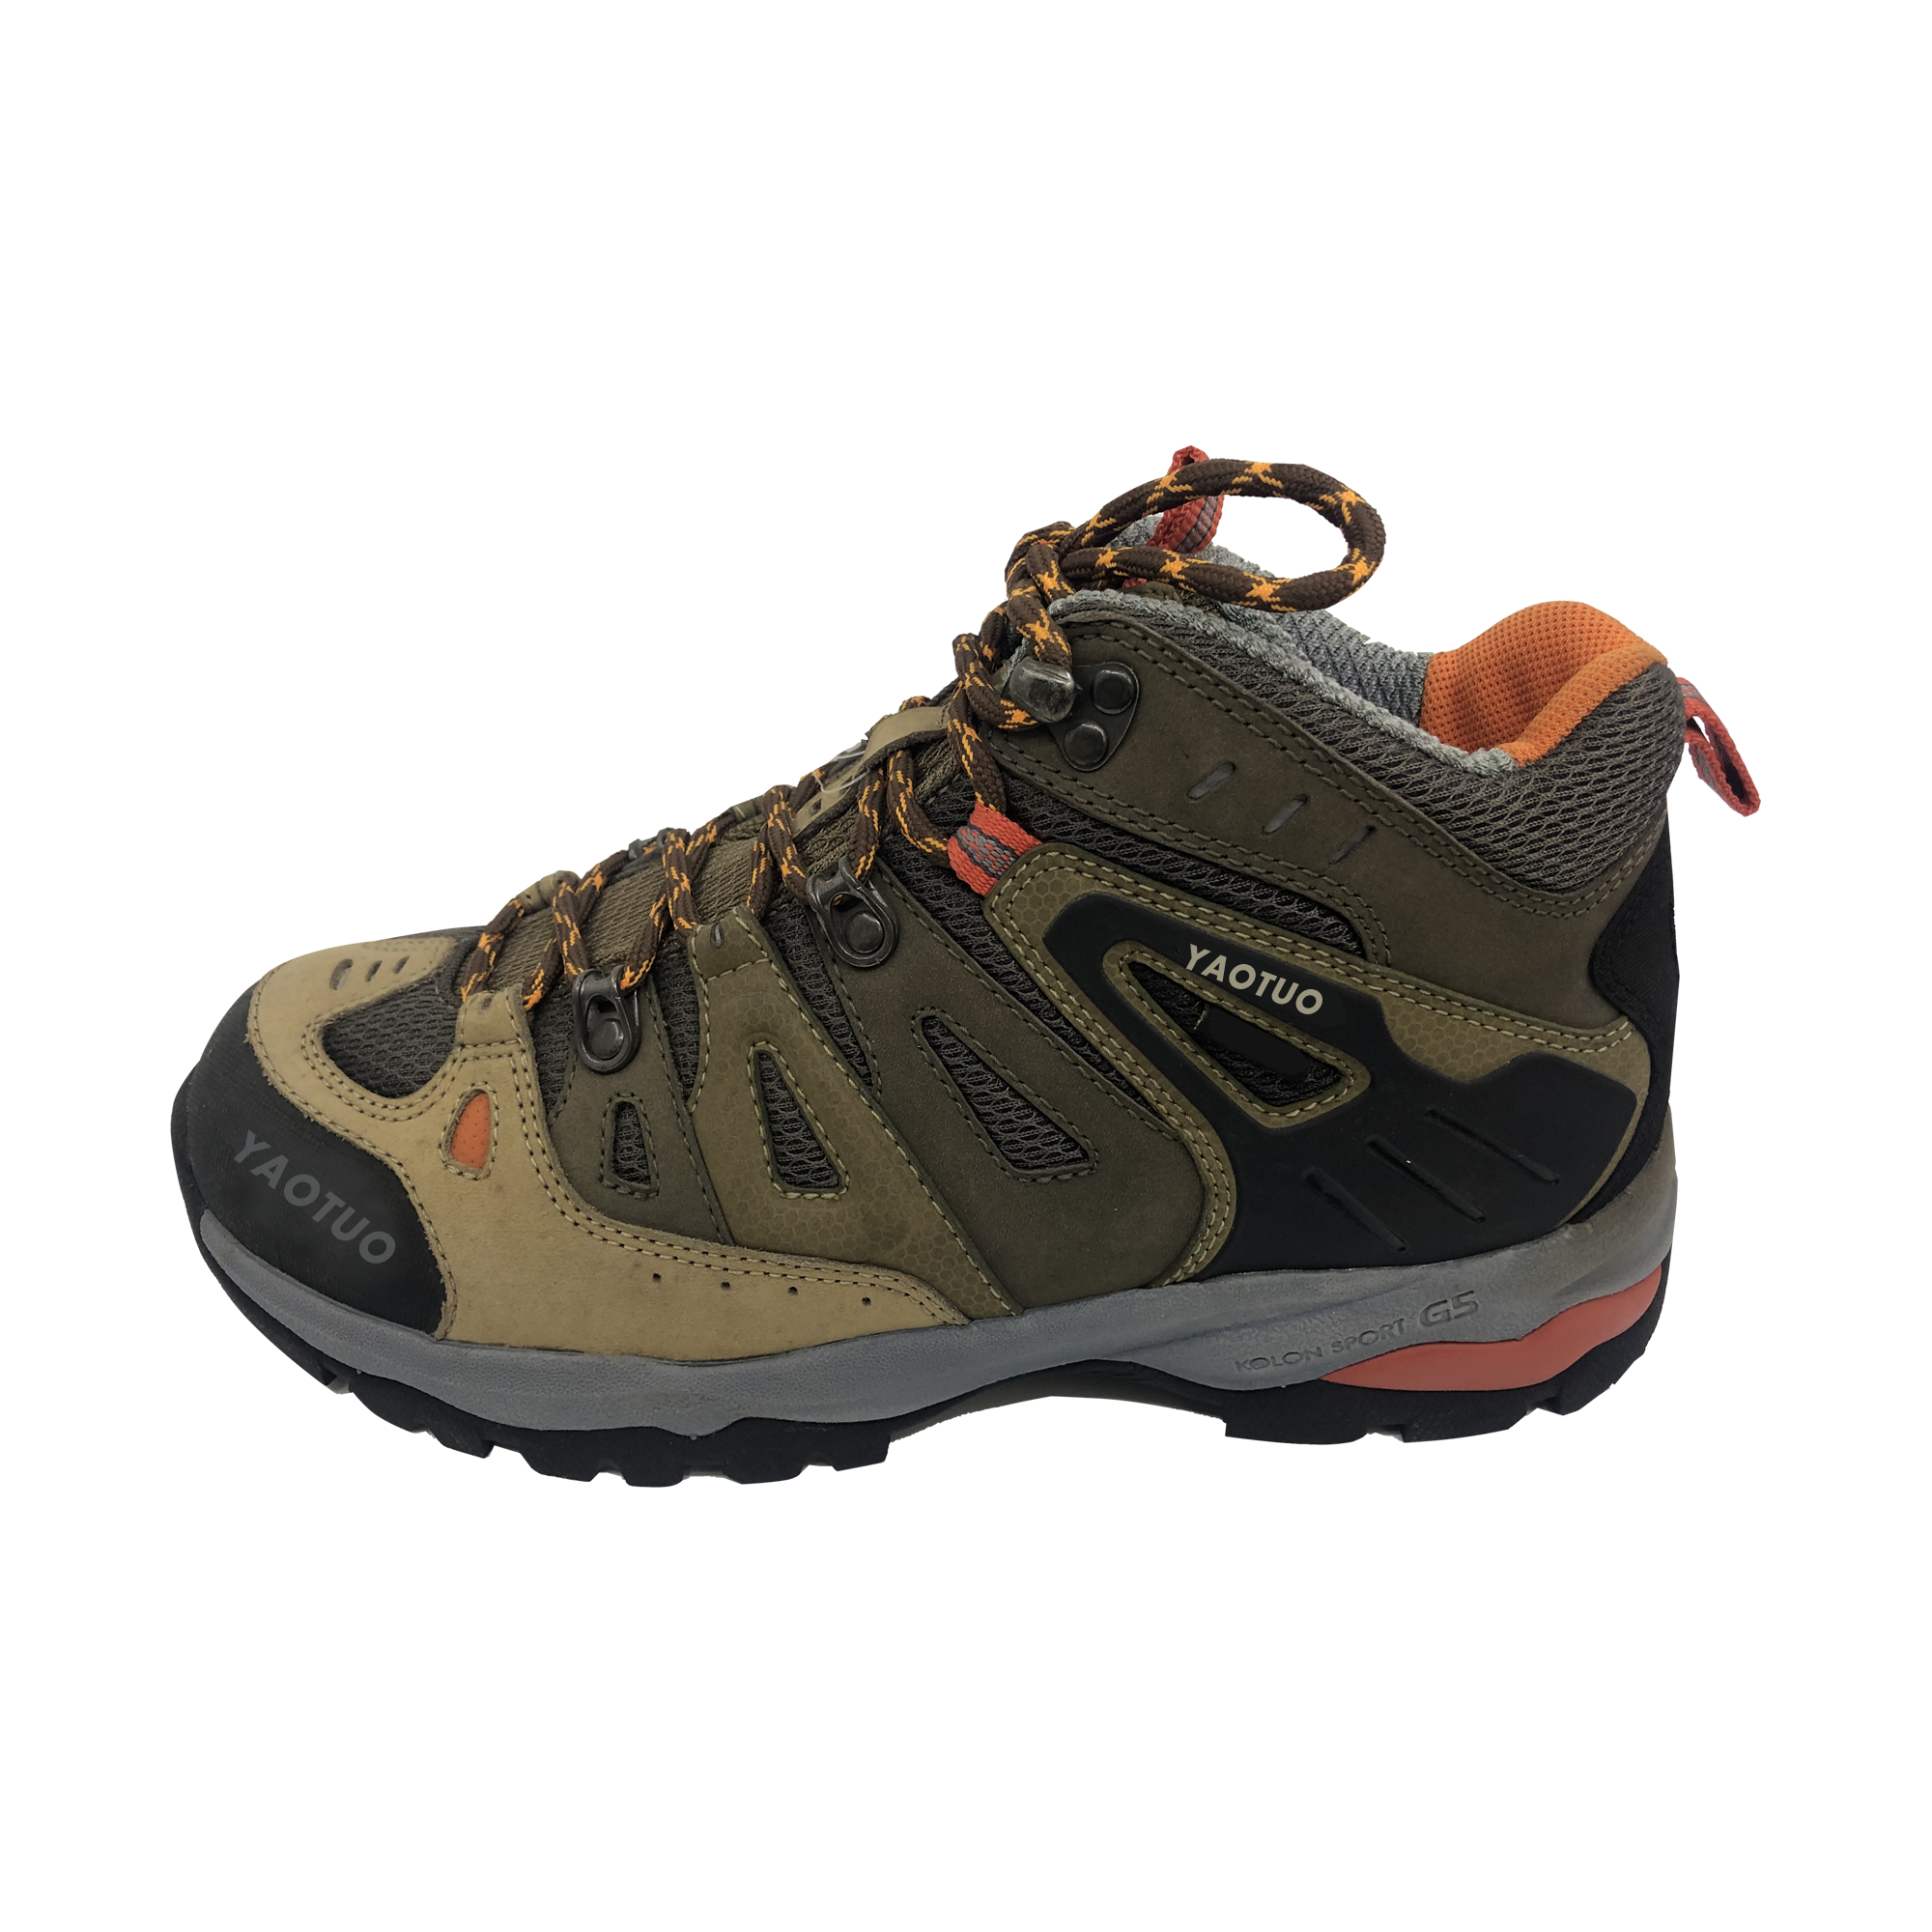 B15847 Hiking Boots Men's Design